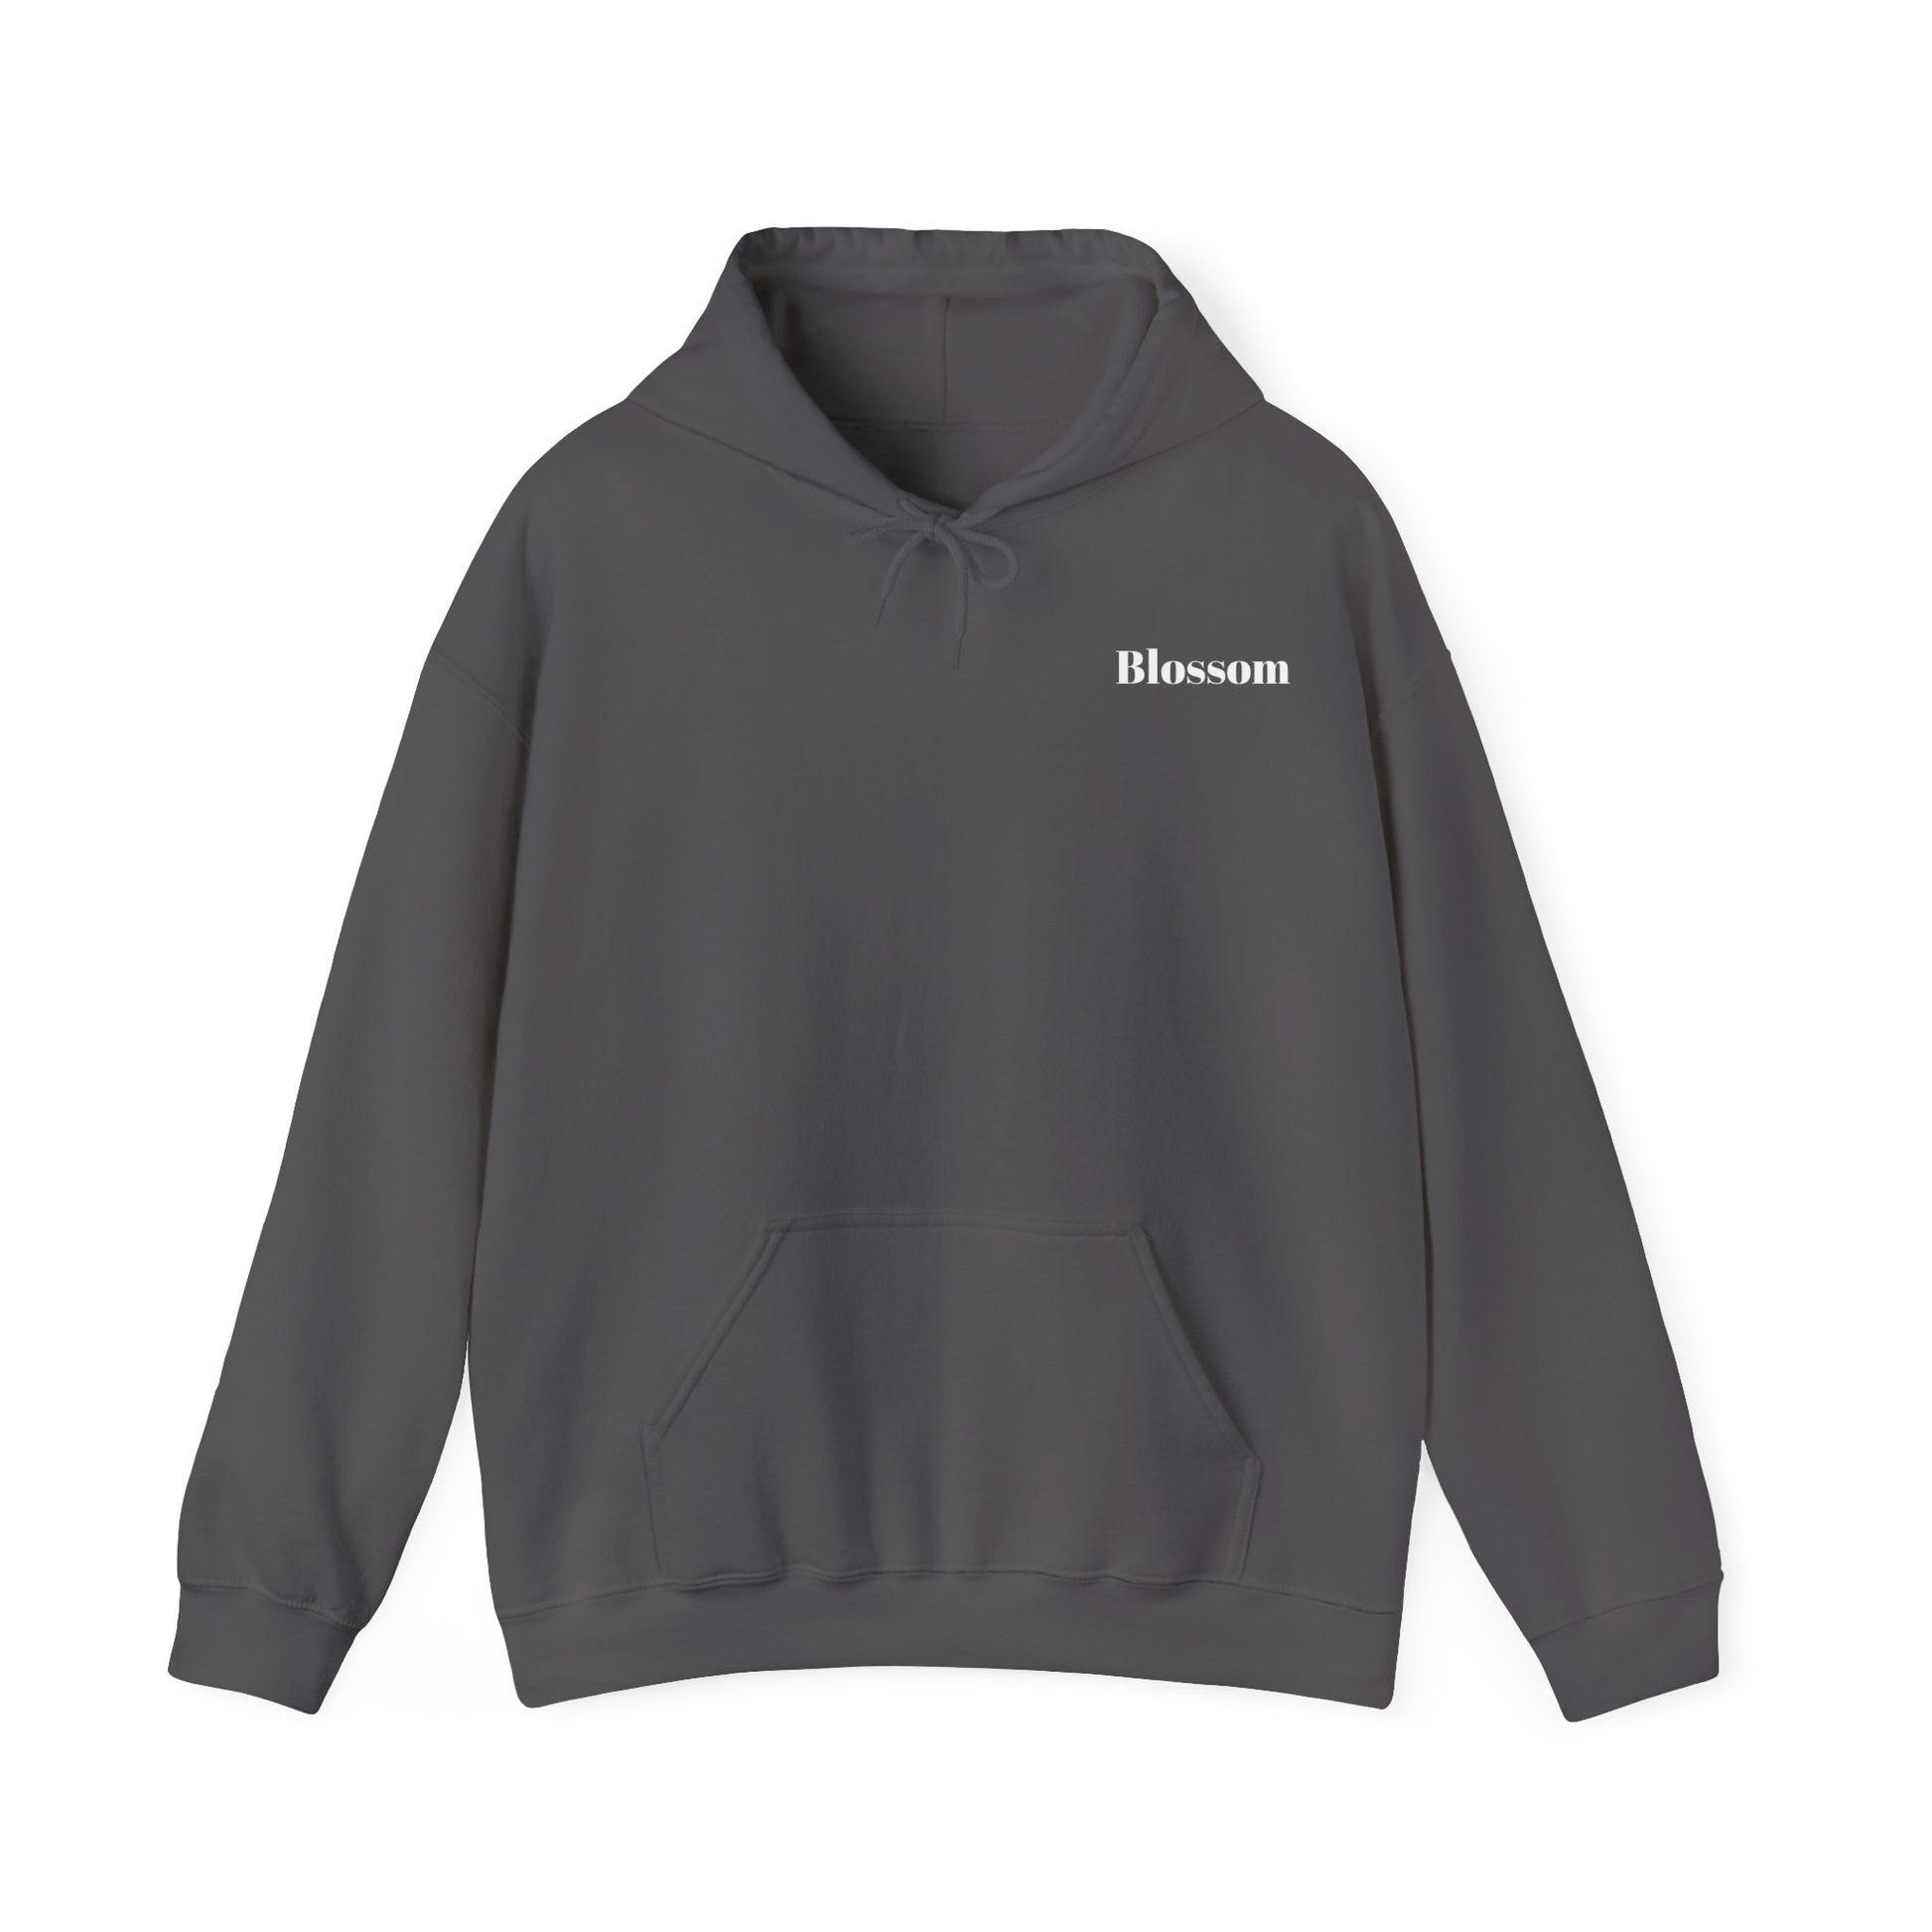 Blossom Unisex Hooded Sweatshirt with Heavy Blend Fabric2